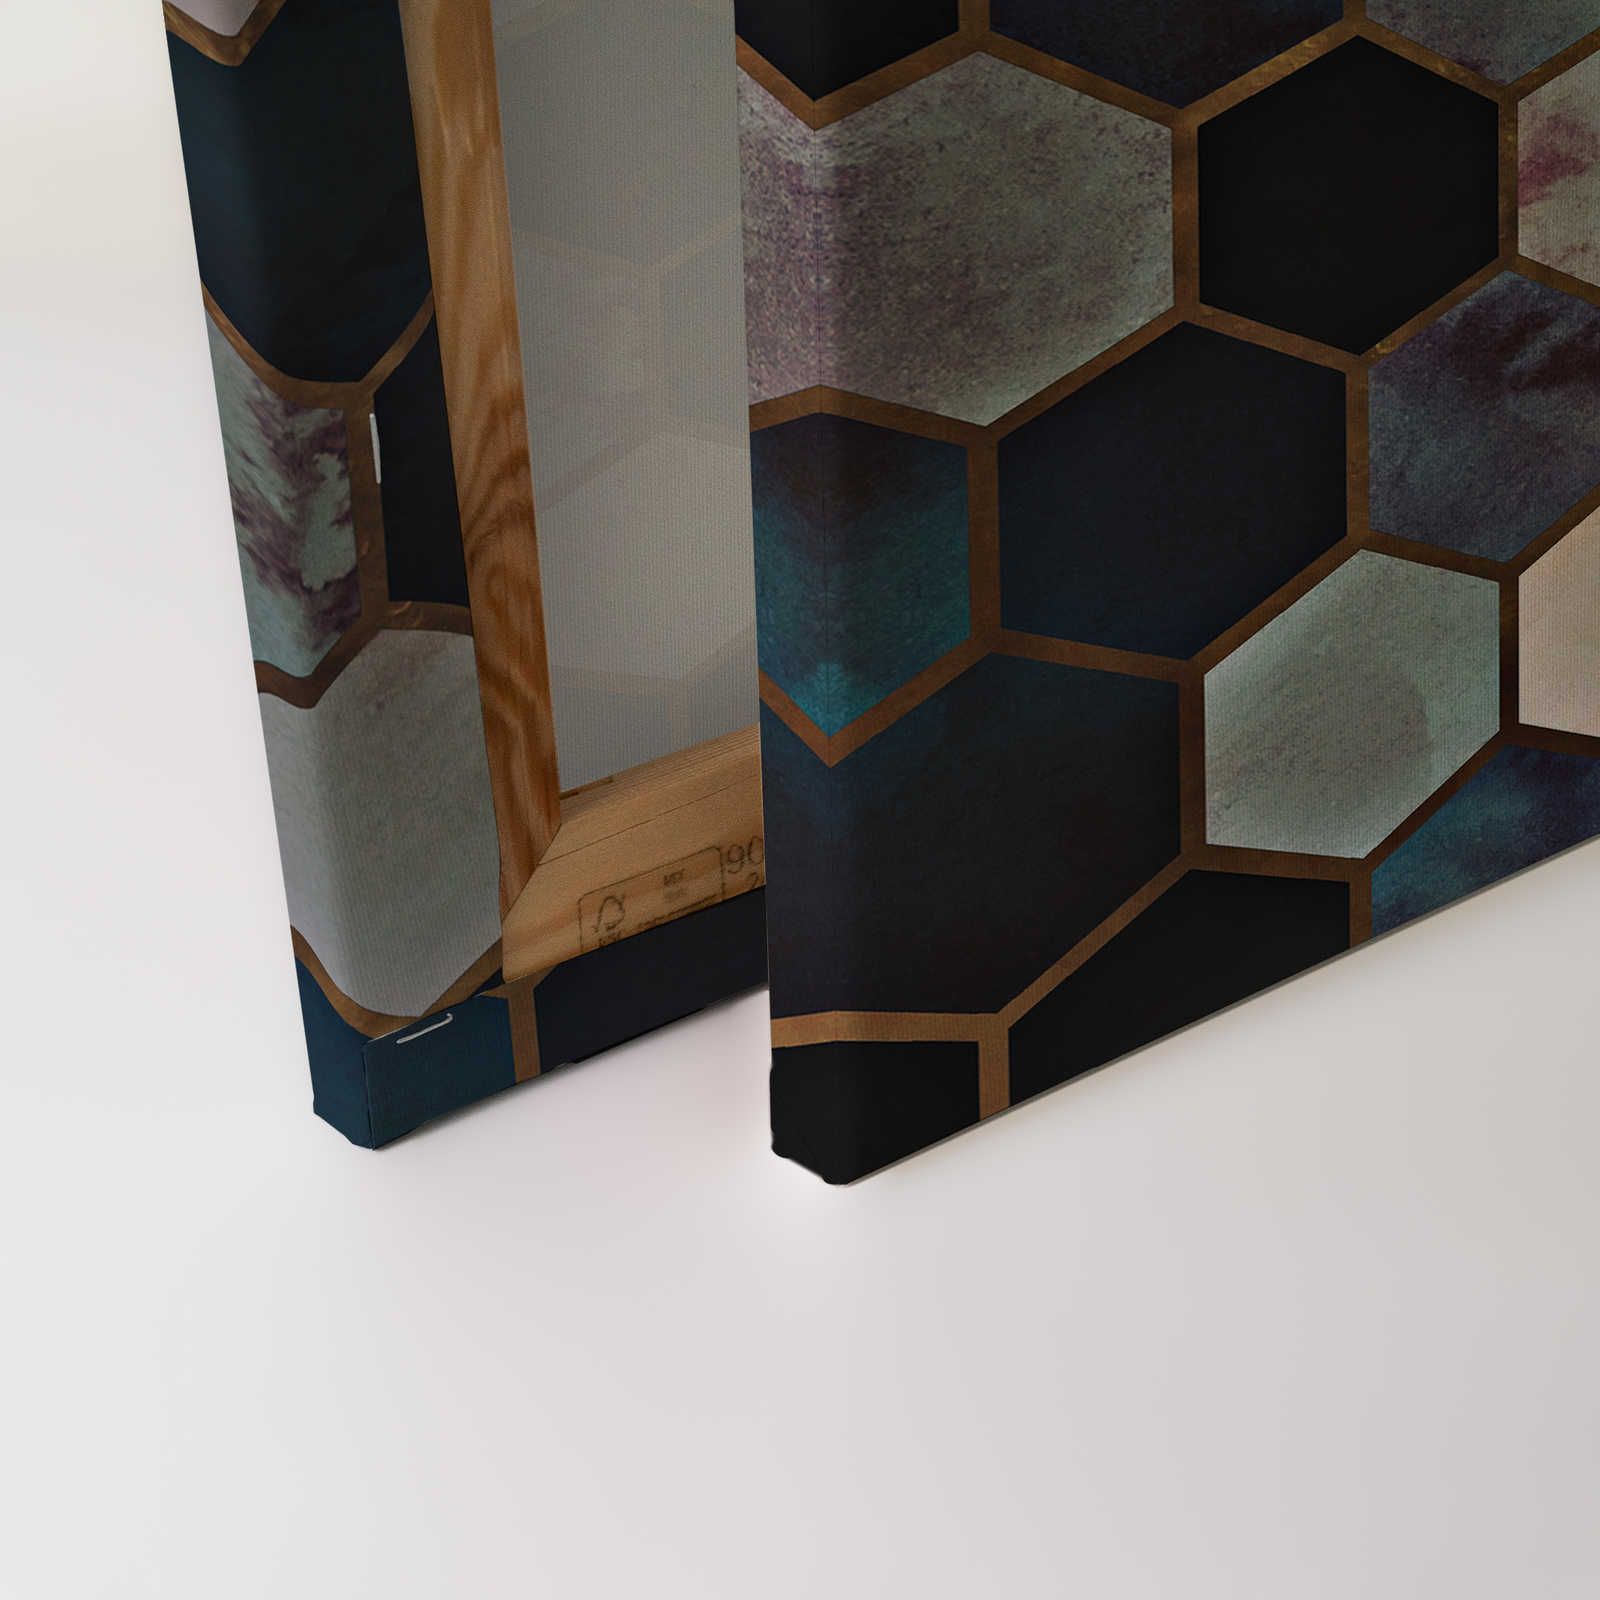             Aquarell Leinwandbild Marmor Design mit Gold Muster – 0,90 m x 0,60 m
        